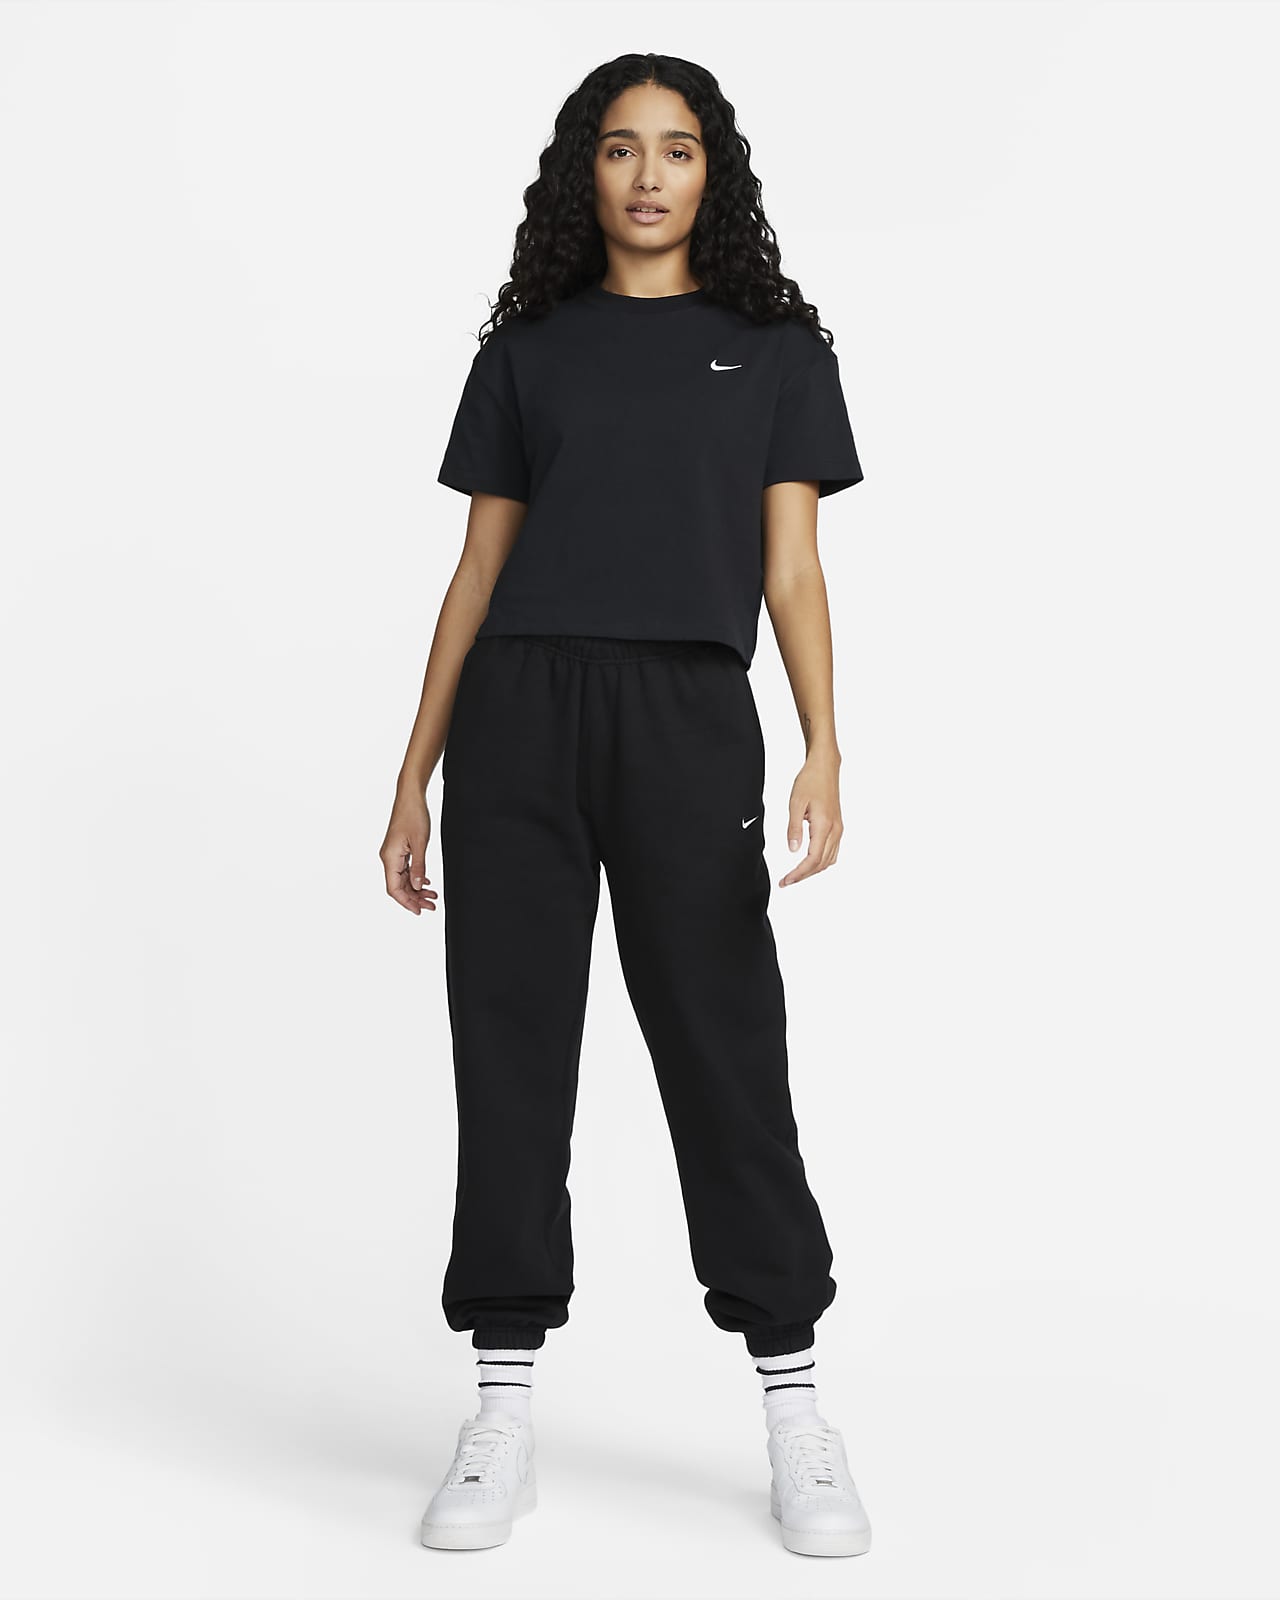 Nike Air Sportswear Jumpsuit Women XS Tan Black Swoosh Logo Active Zip Up  Pocket